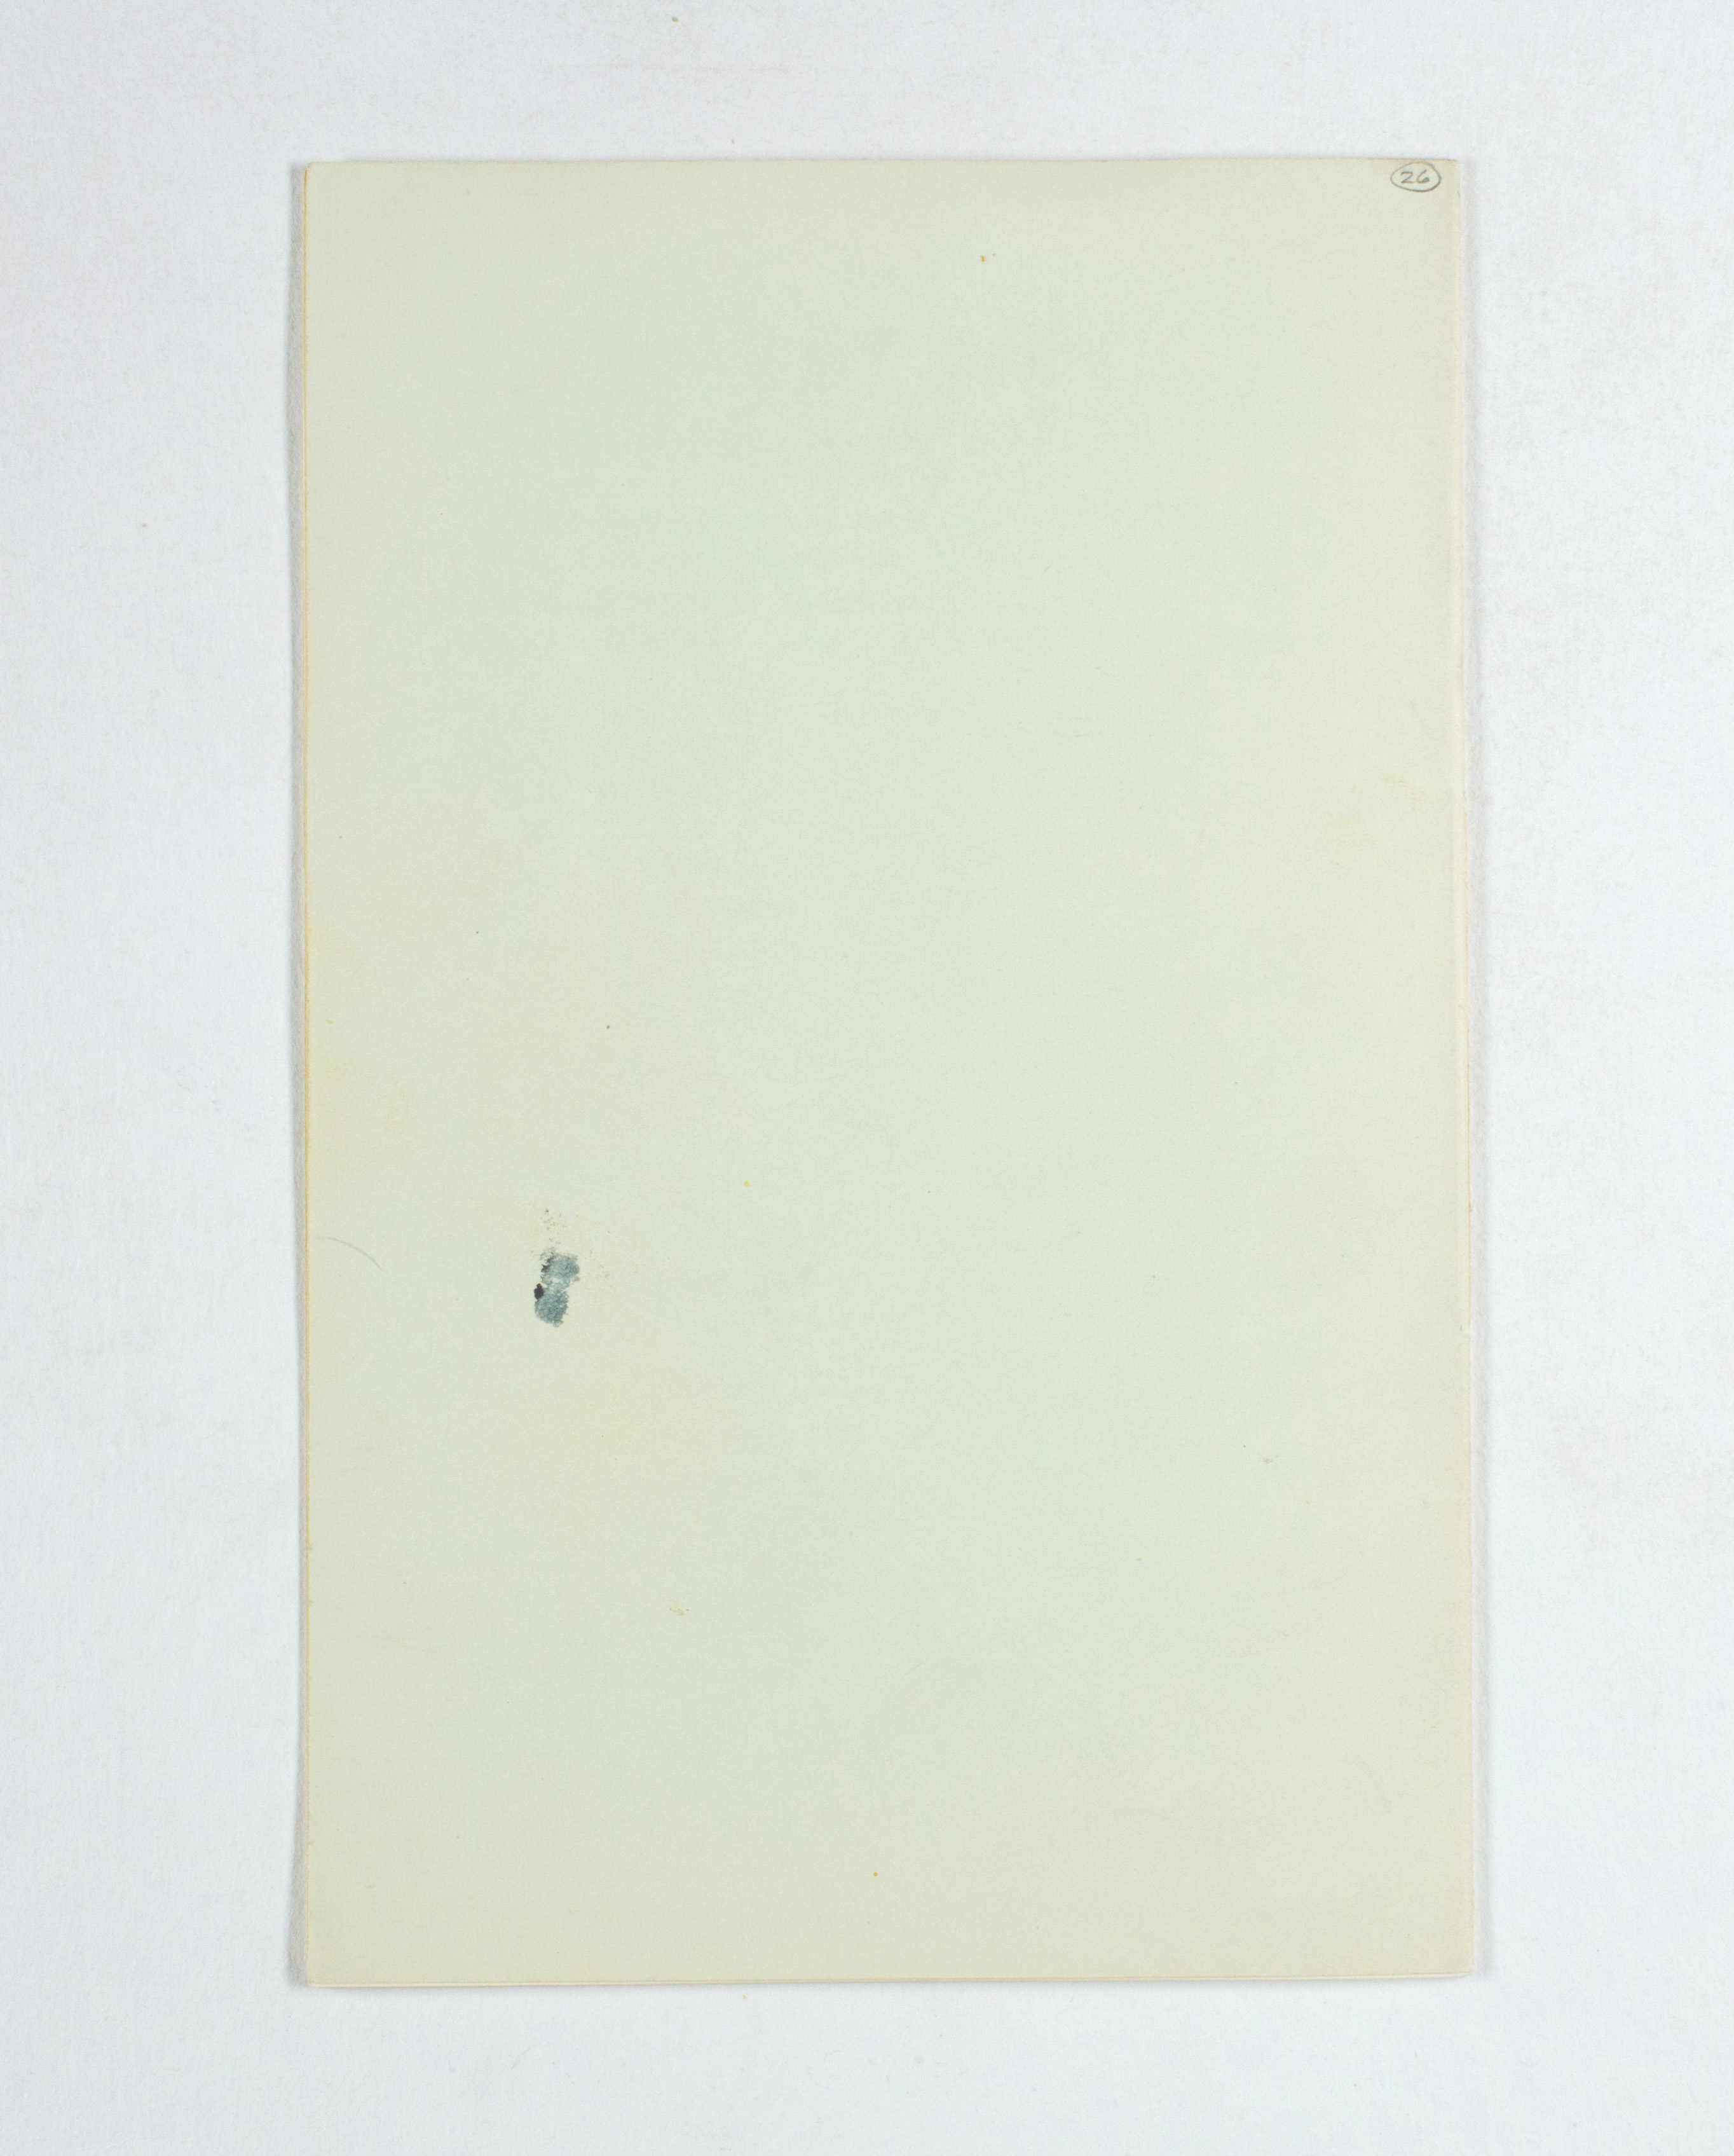 1924-25 Badari, Faiyum Exhibition catalogue PMA/WFP1/D/28/26.9